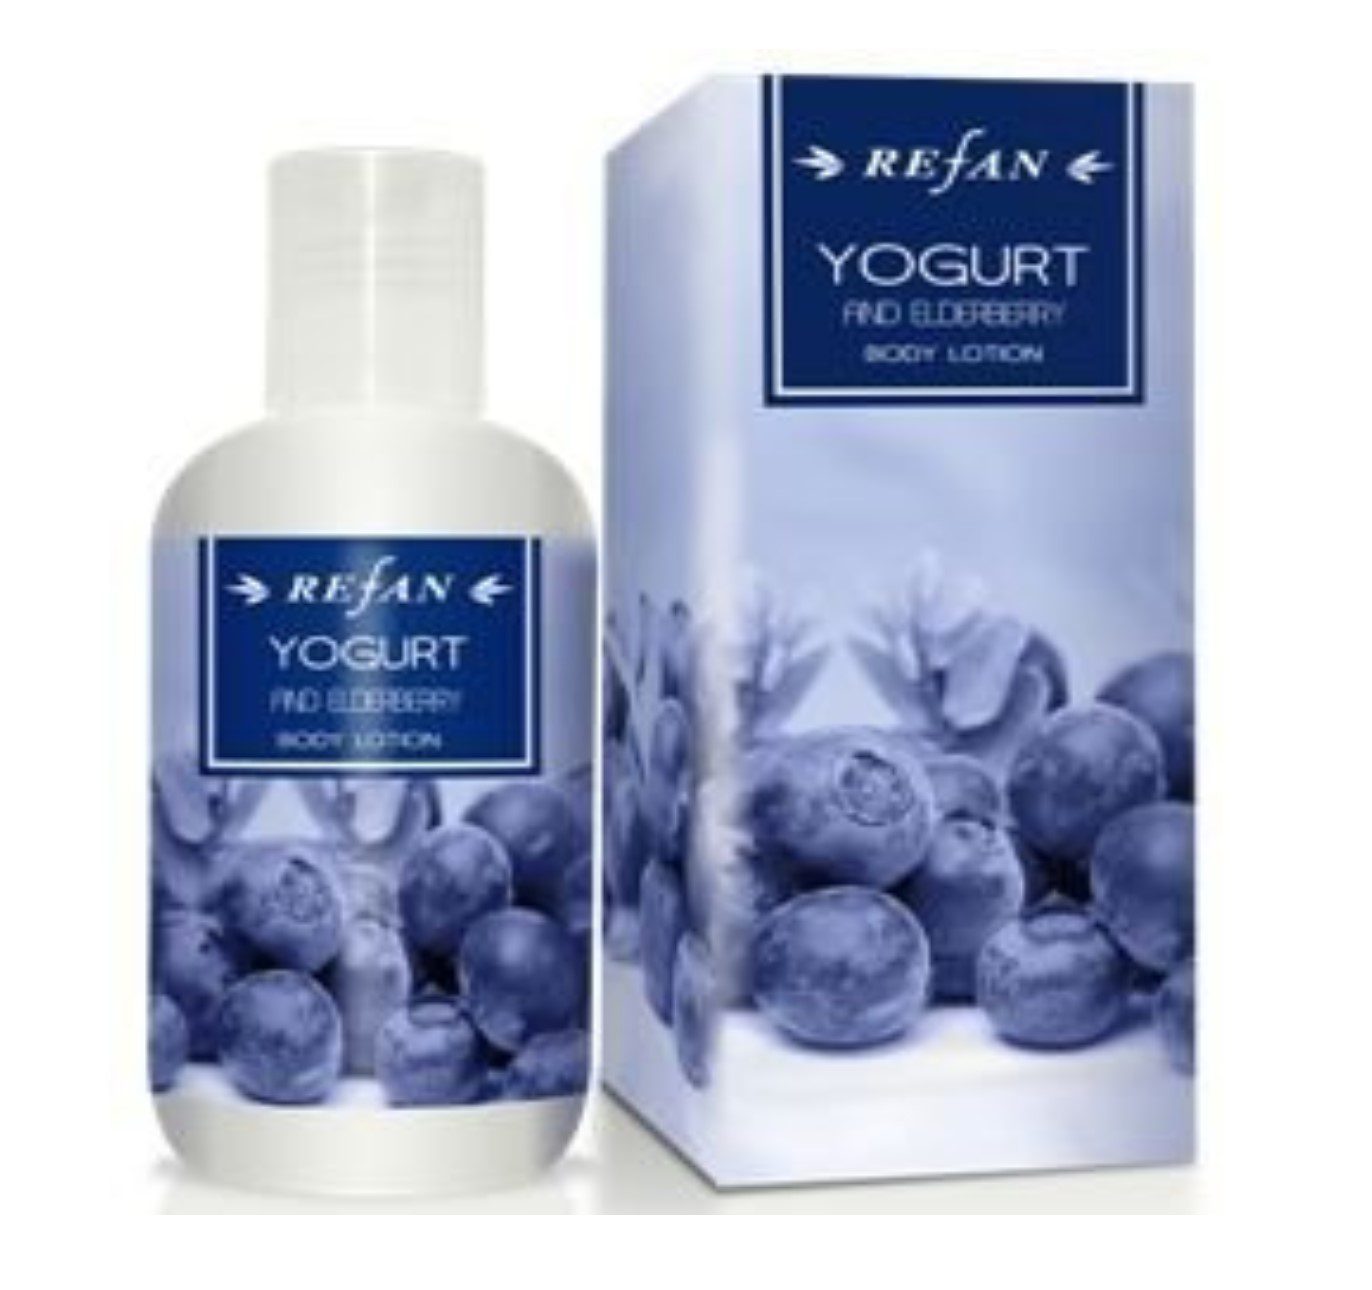 Refan natuurlijke Yoghurt en Vlierbessen body lotion - anti-oxidant lotion - hersteld de huid 200ml